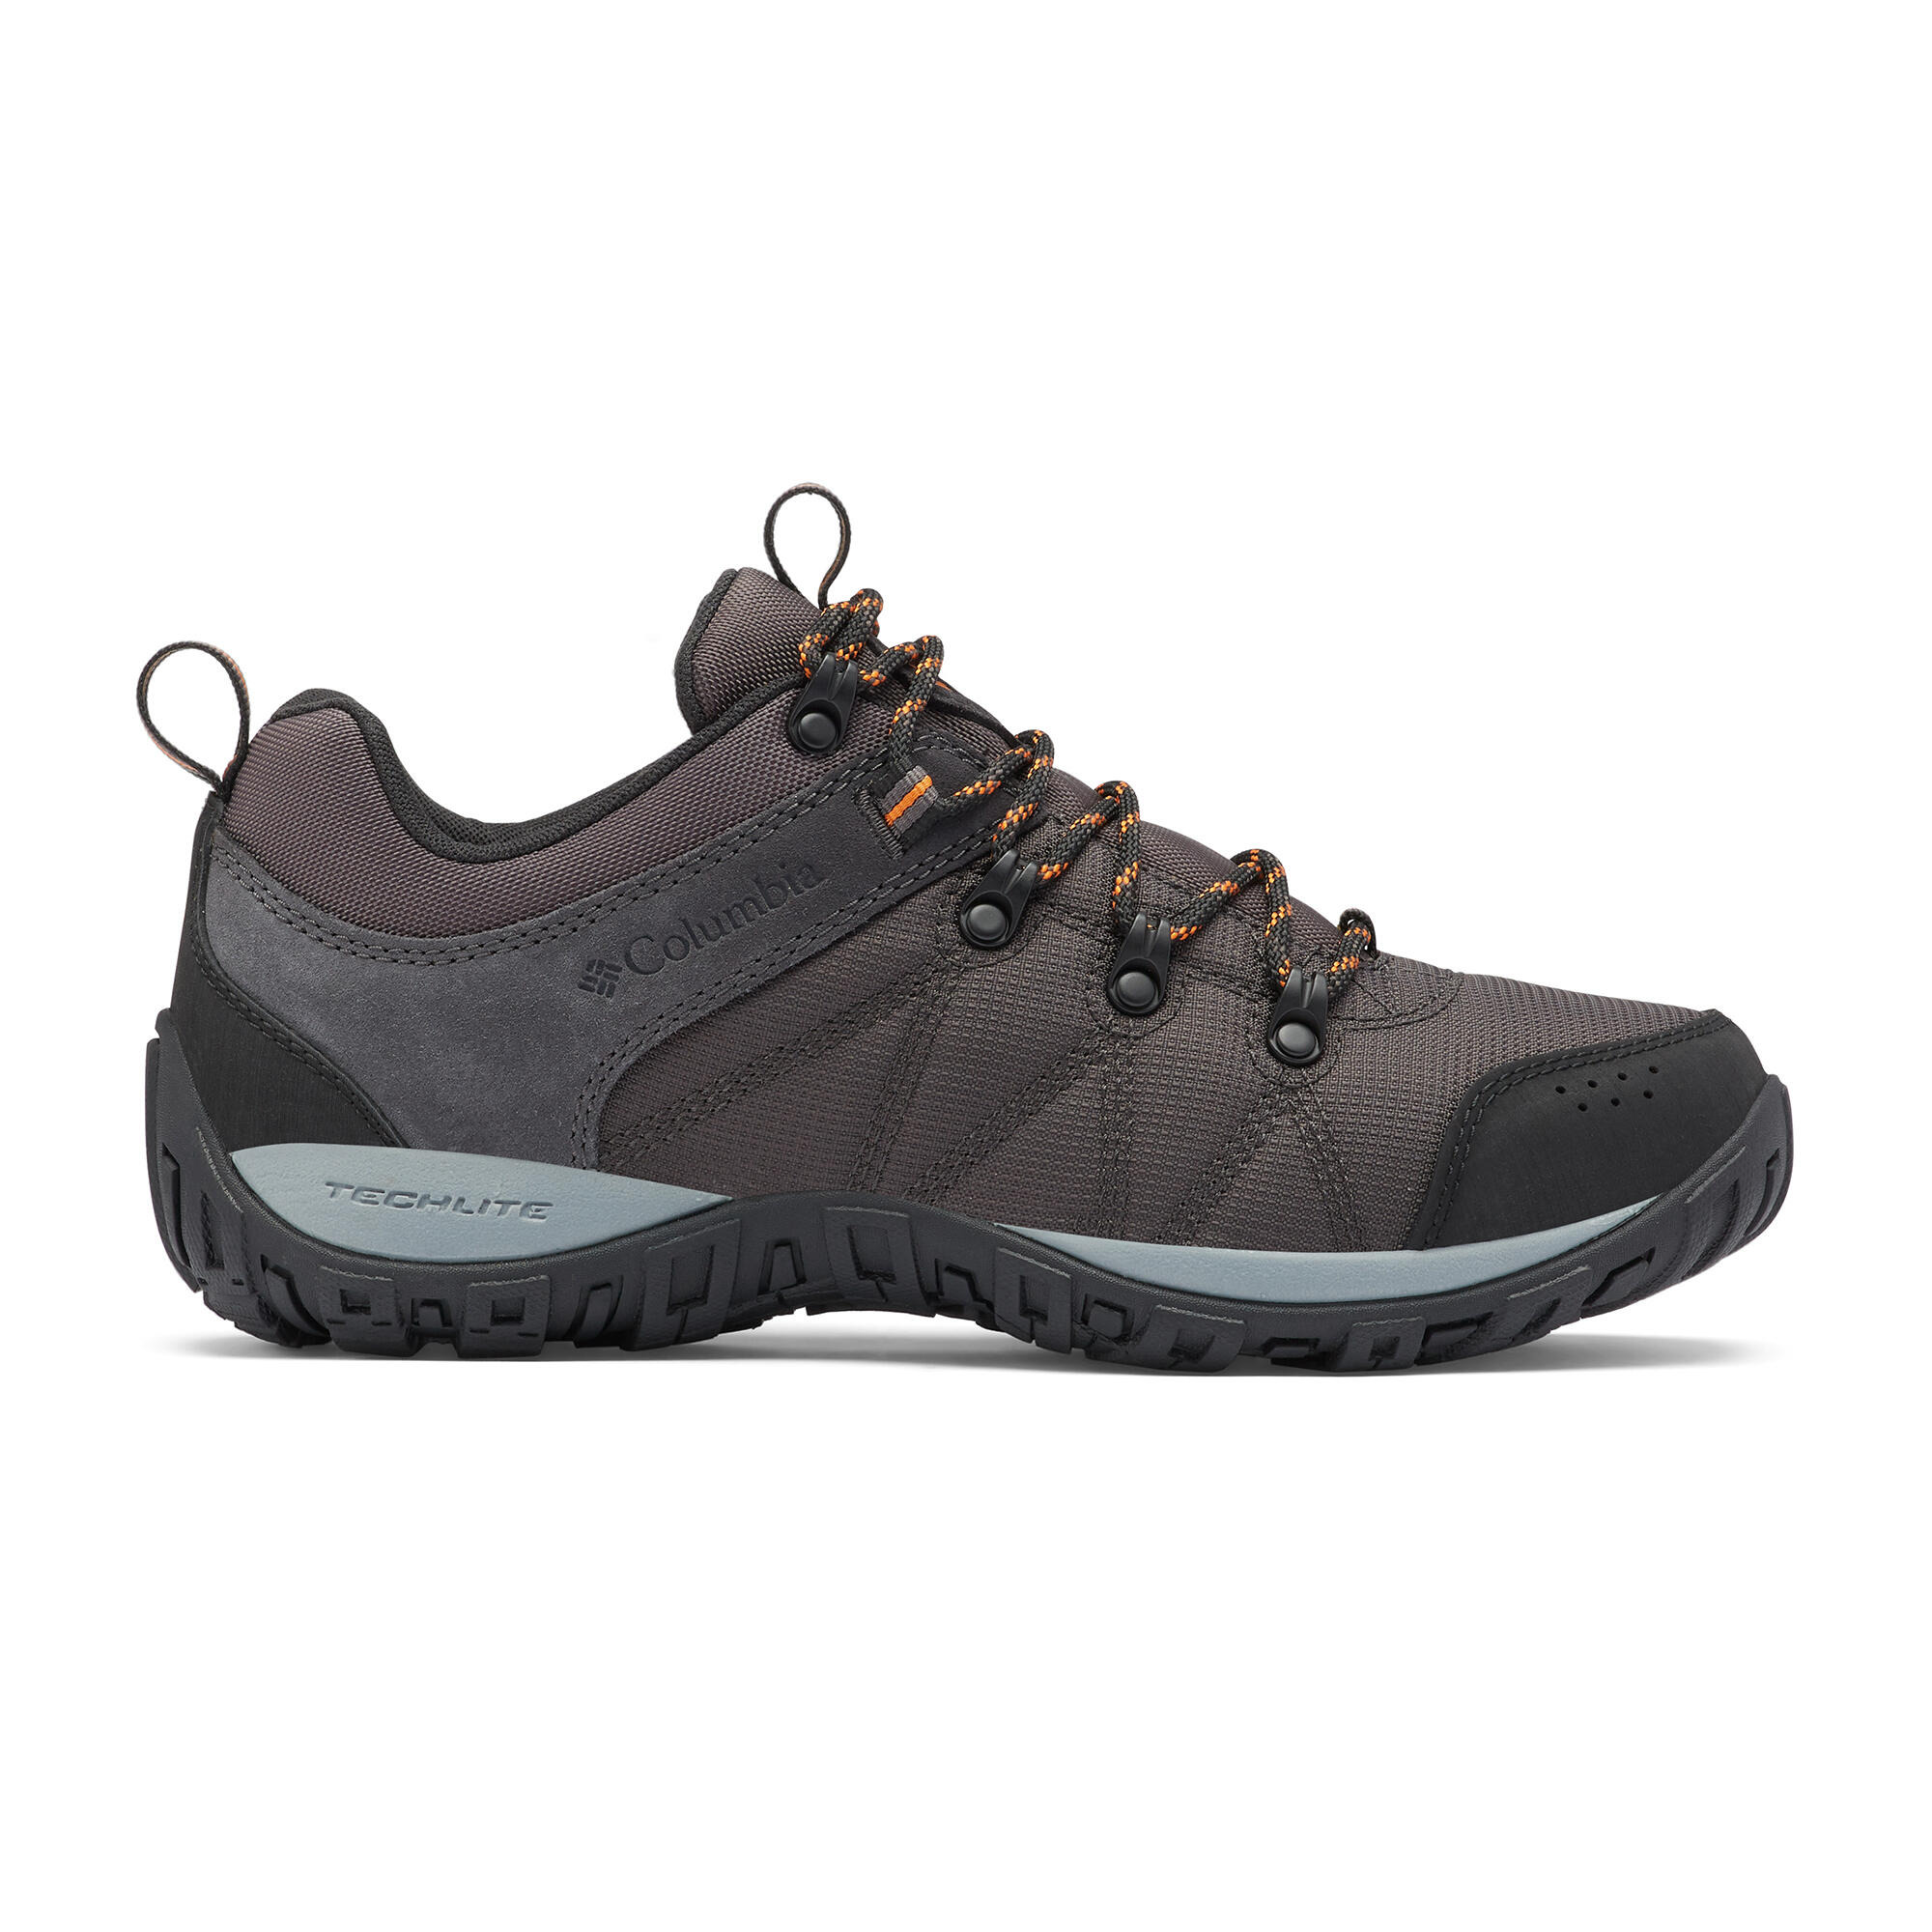 Men’s hiking shoes - Peakfreak Venture Columbia lowtop 2/9